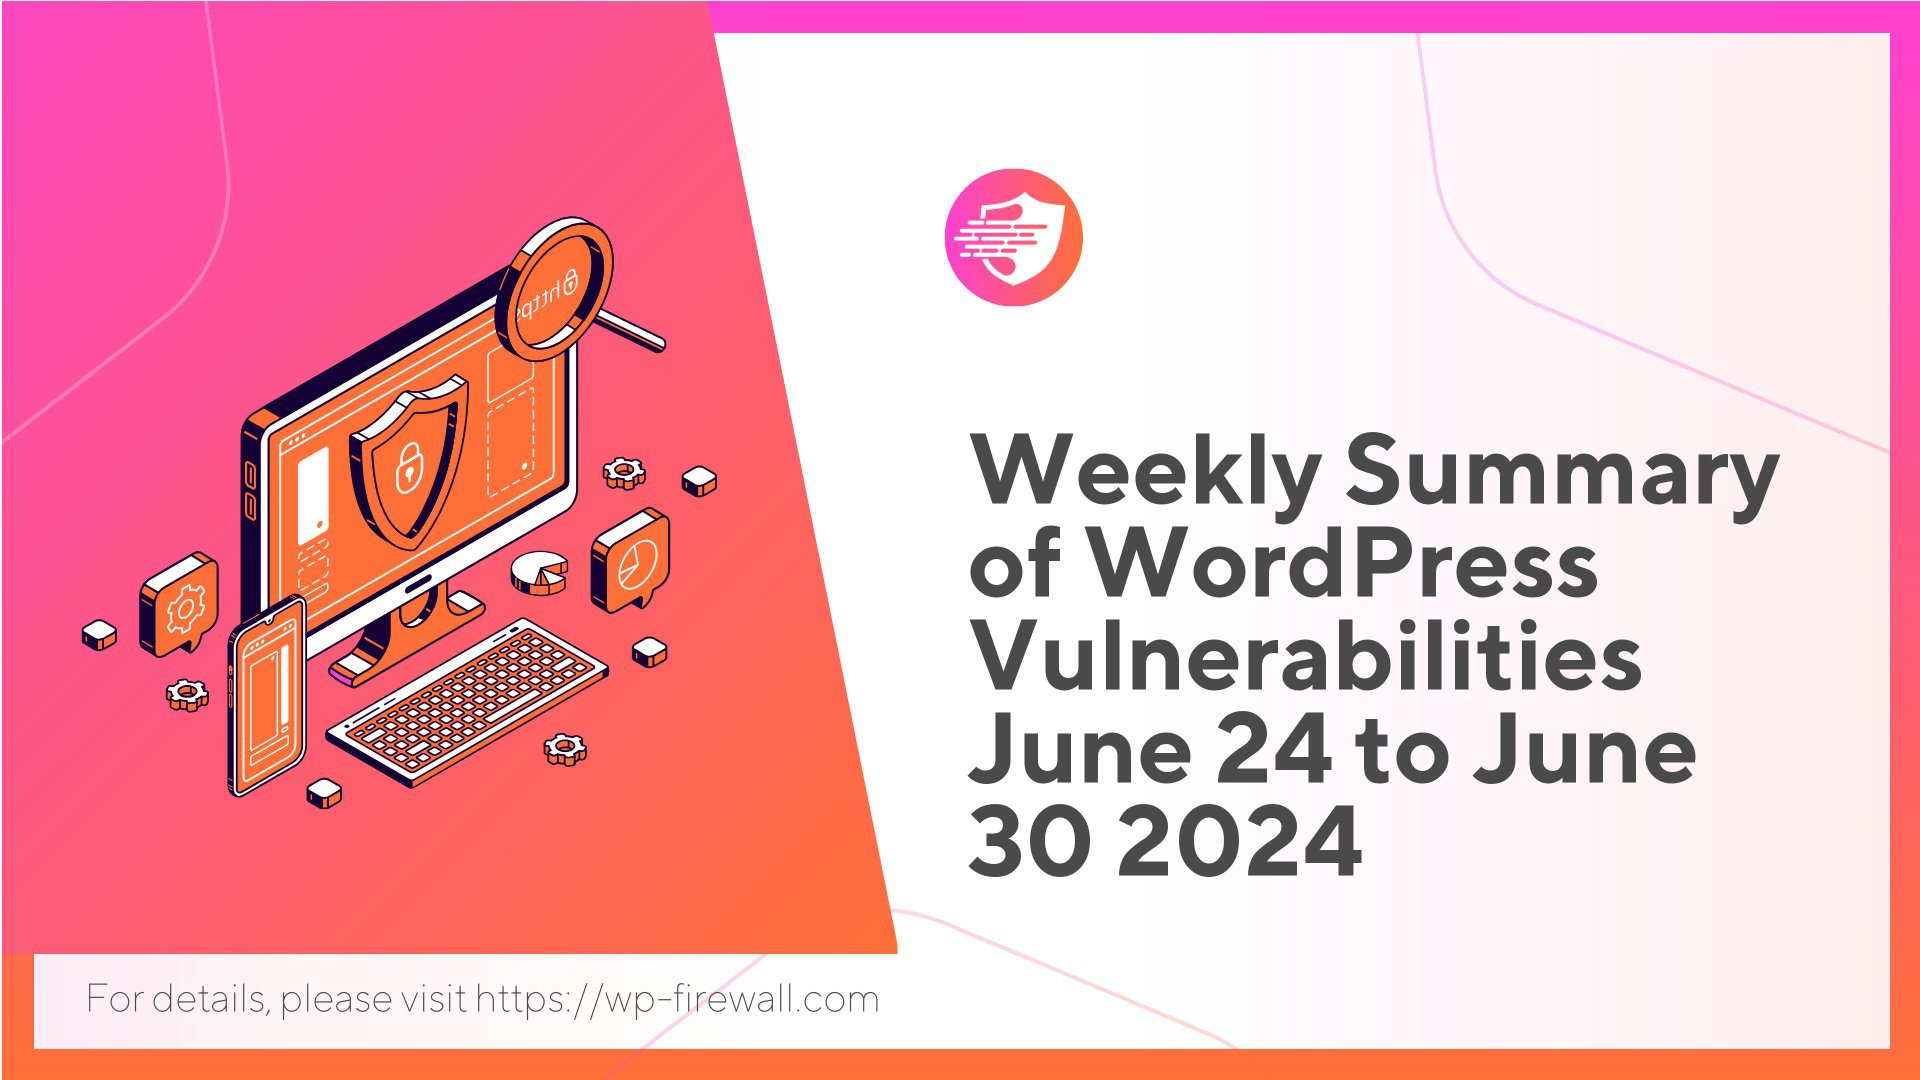 Weekly Summary of WordPress Vulnerabilities June 24 to June 30 2024 cover